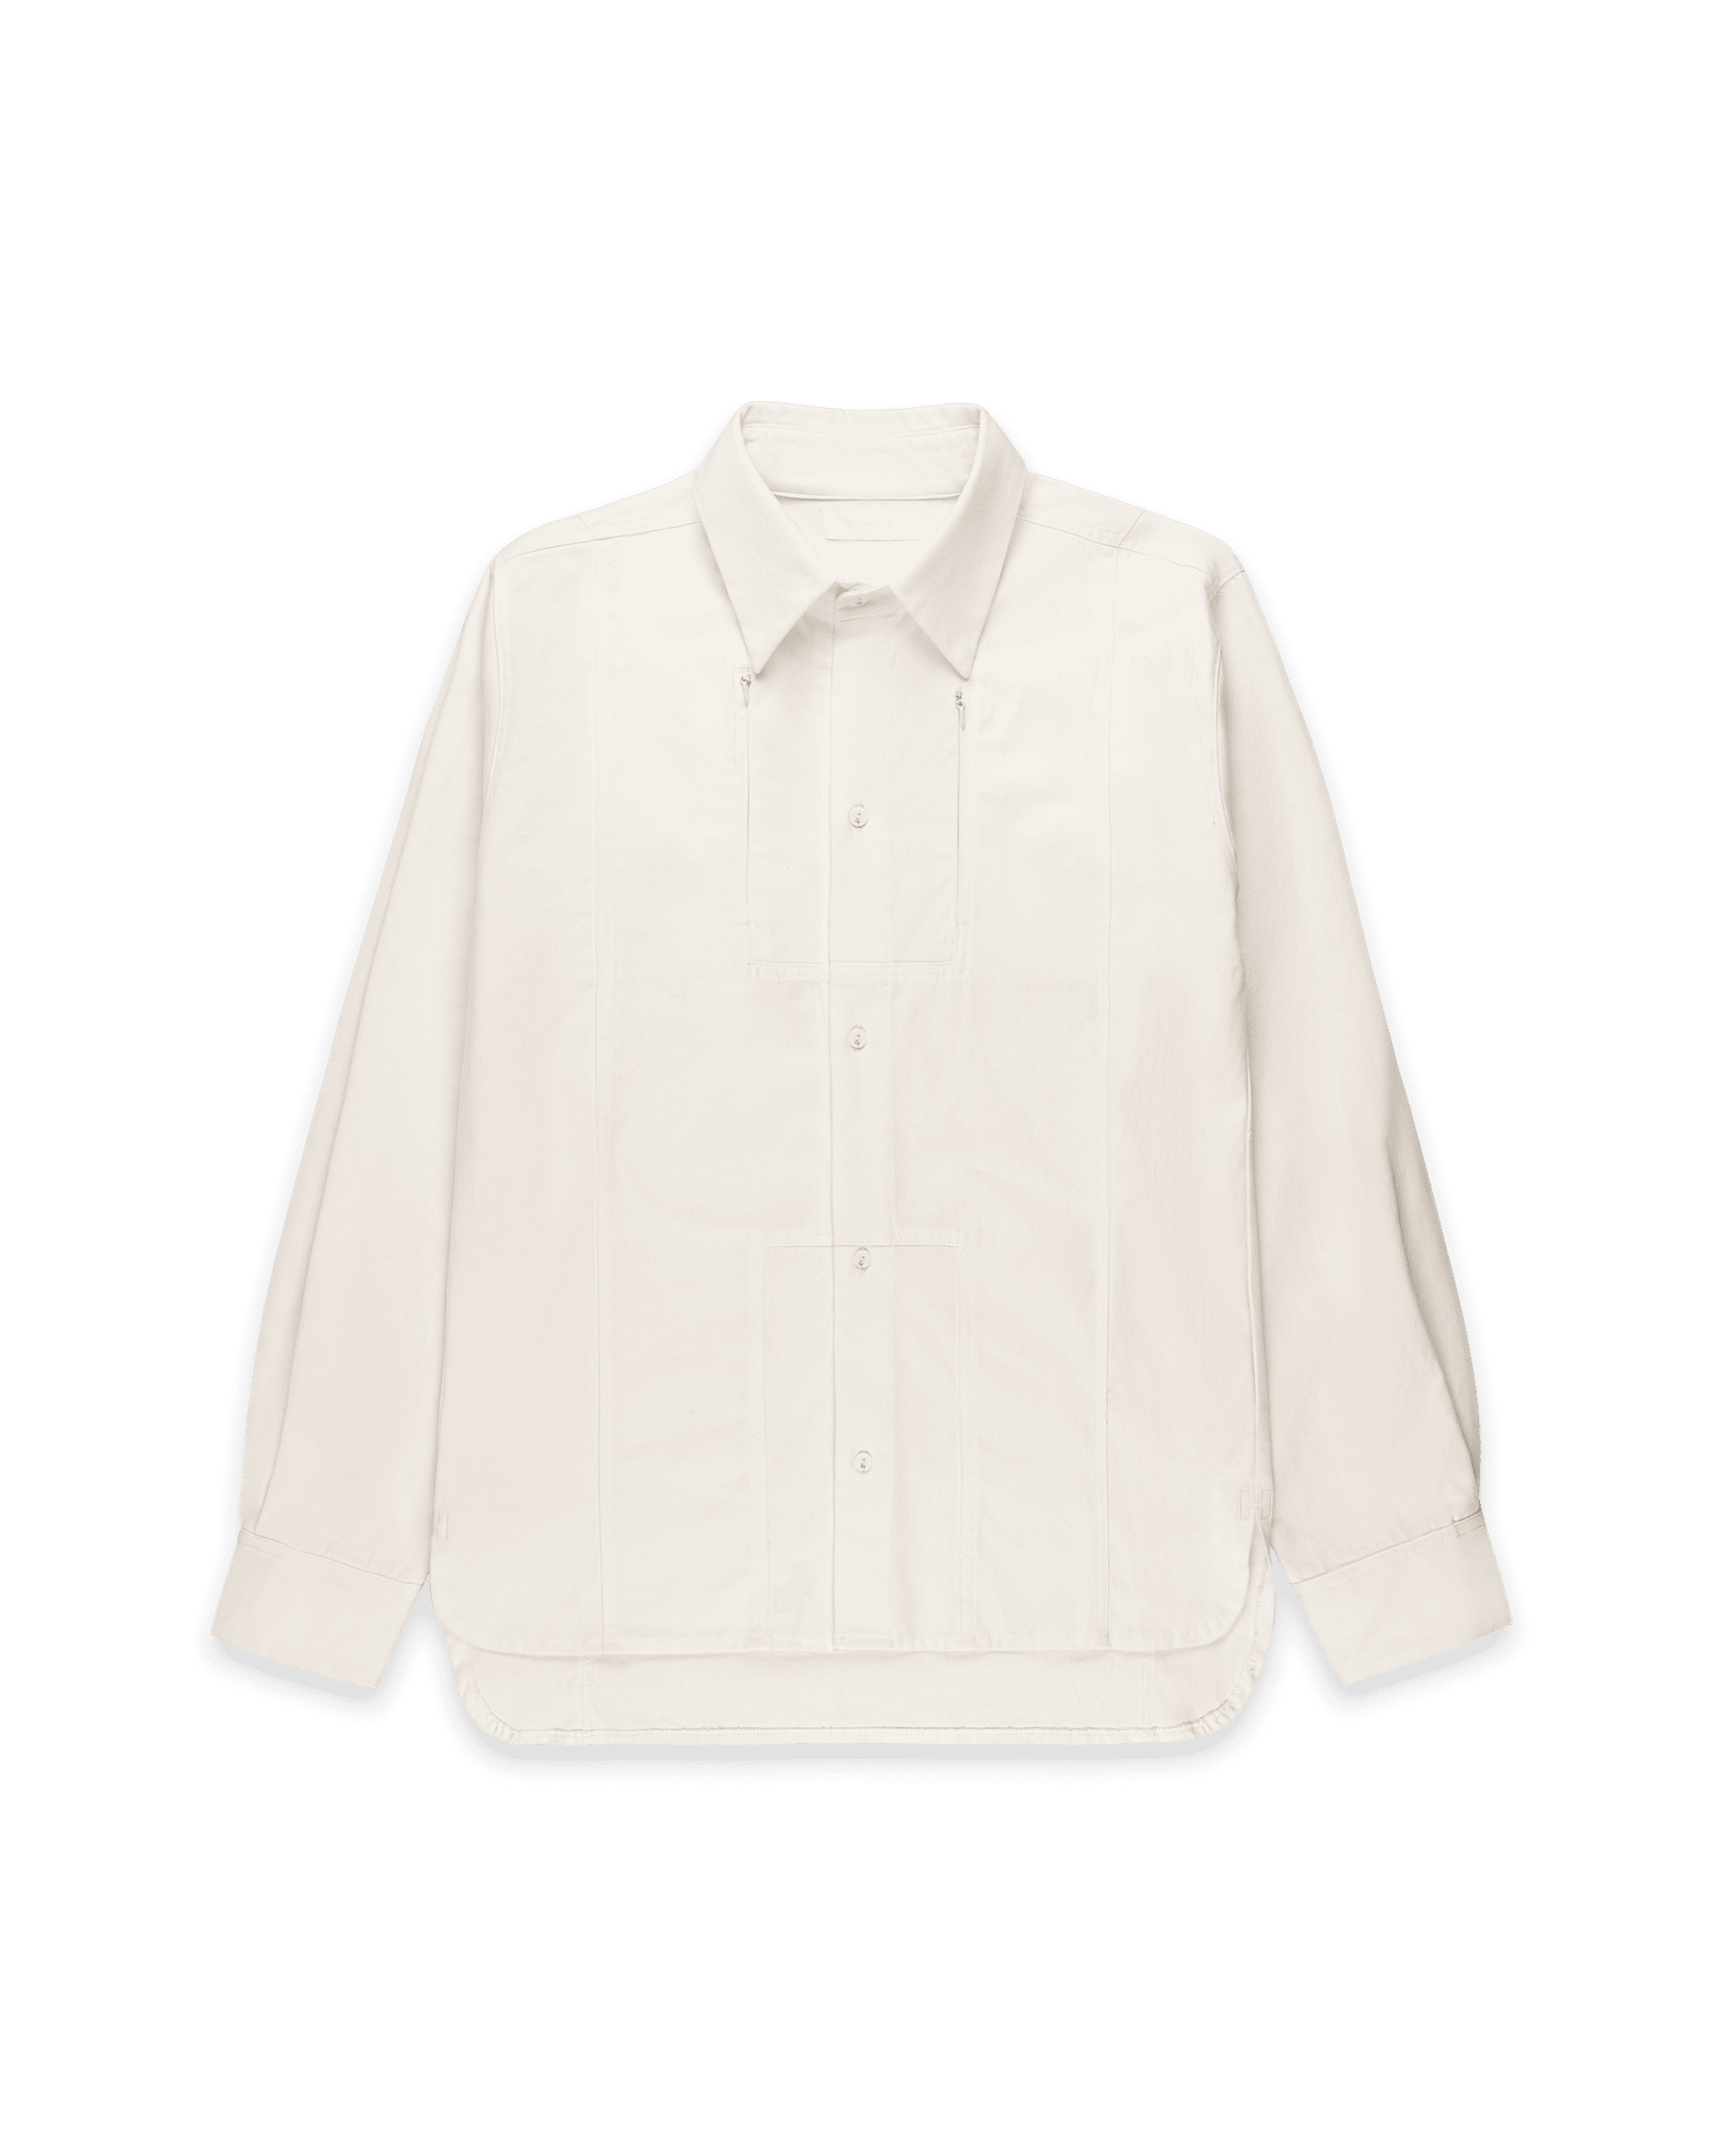 architect shirt, white